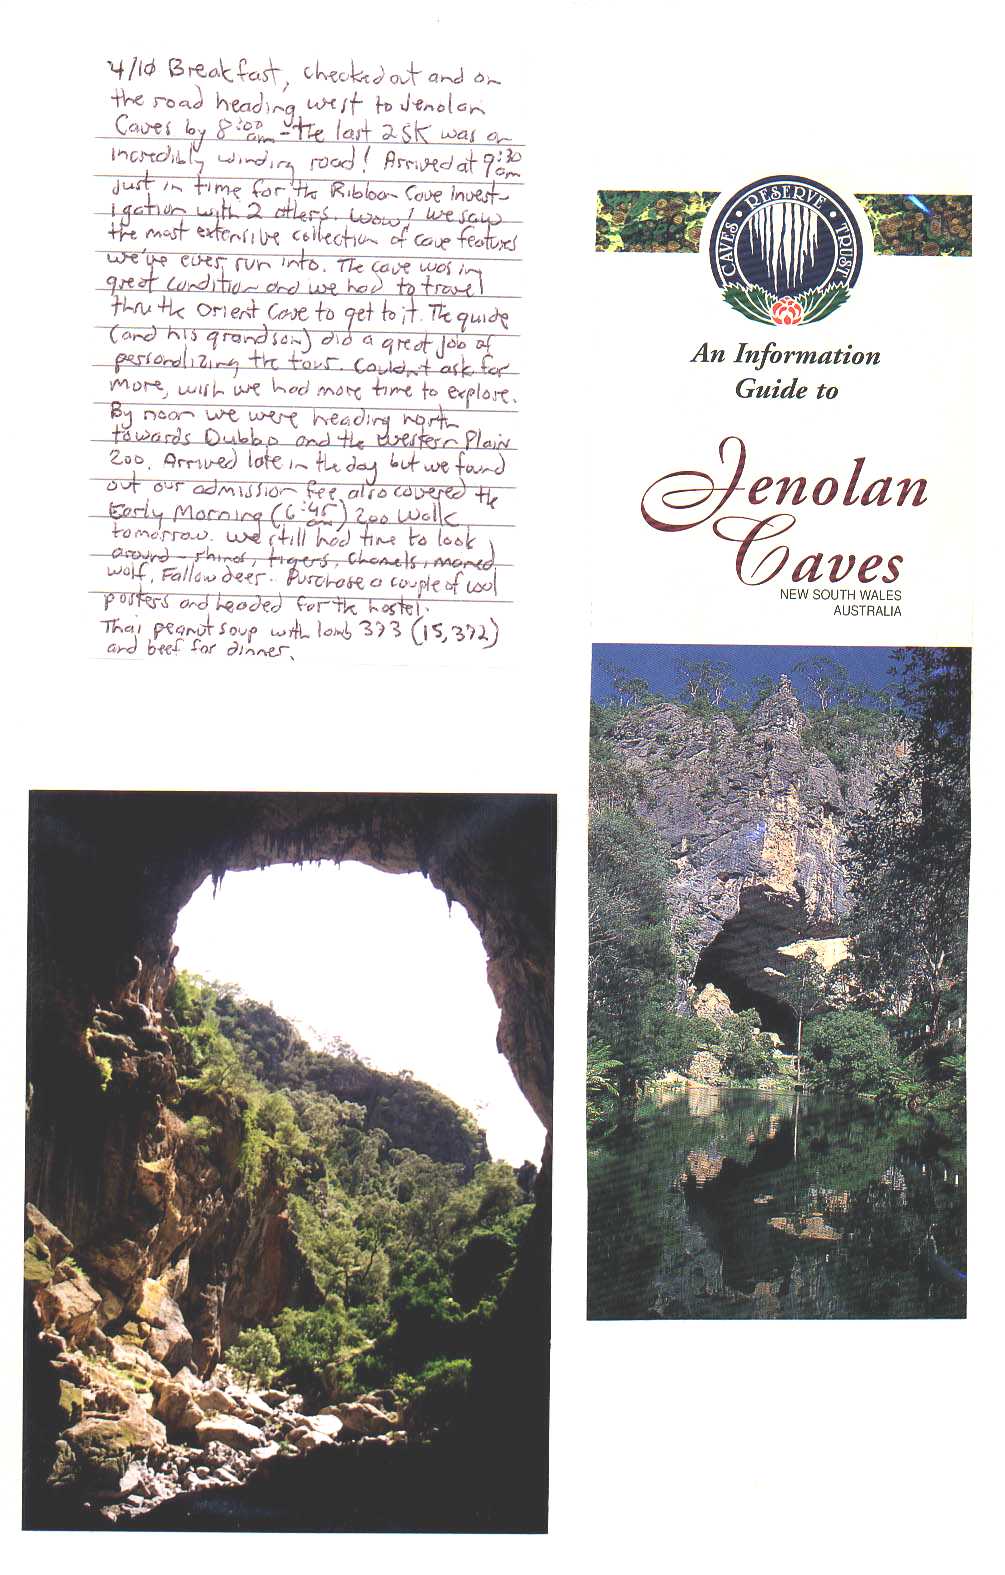 Jenolan Caves New South Wales Australia